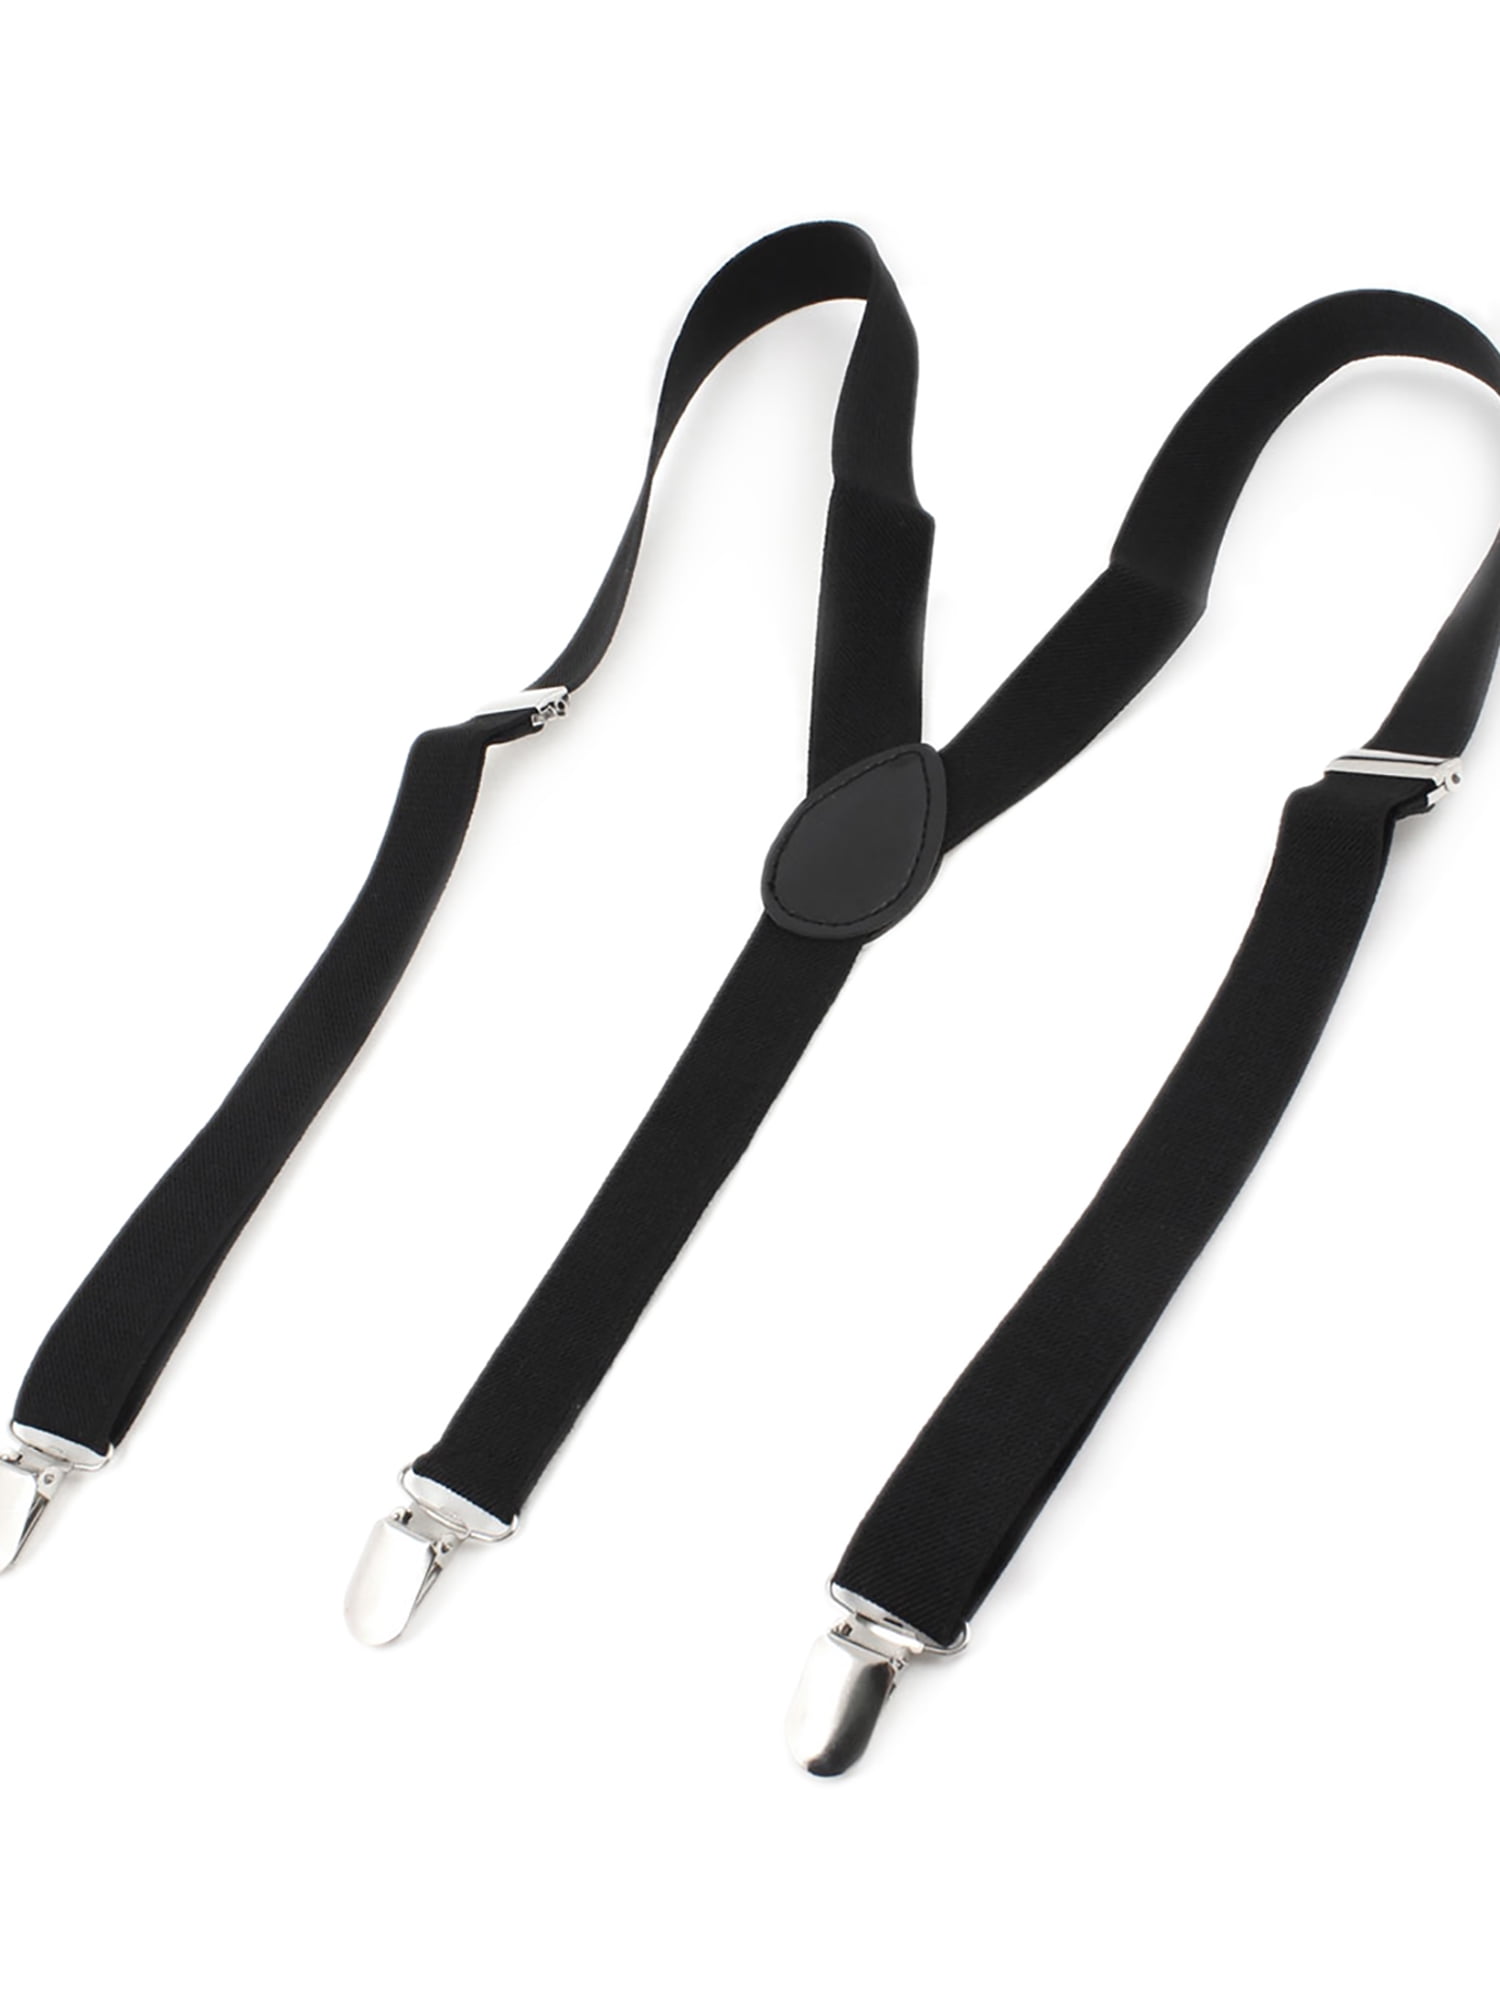 Florencenid Fashionable Adjustable Y-Back Elastic Clip-on Unisex Pants Suspender Brace Selling Highly Stretchable Adjustable Suspender